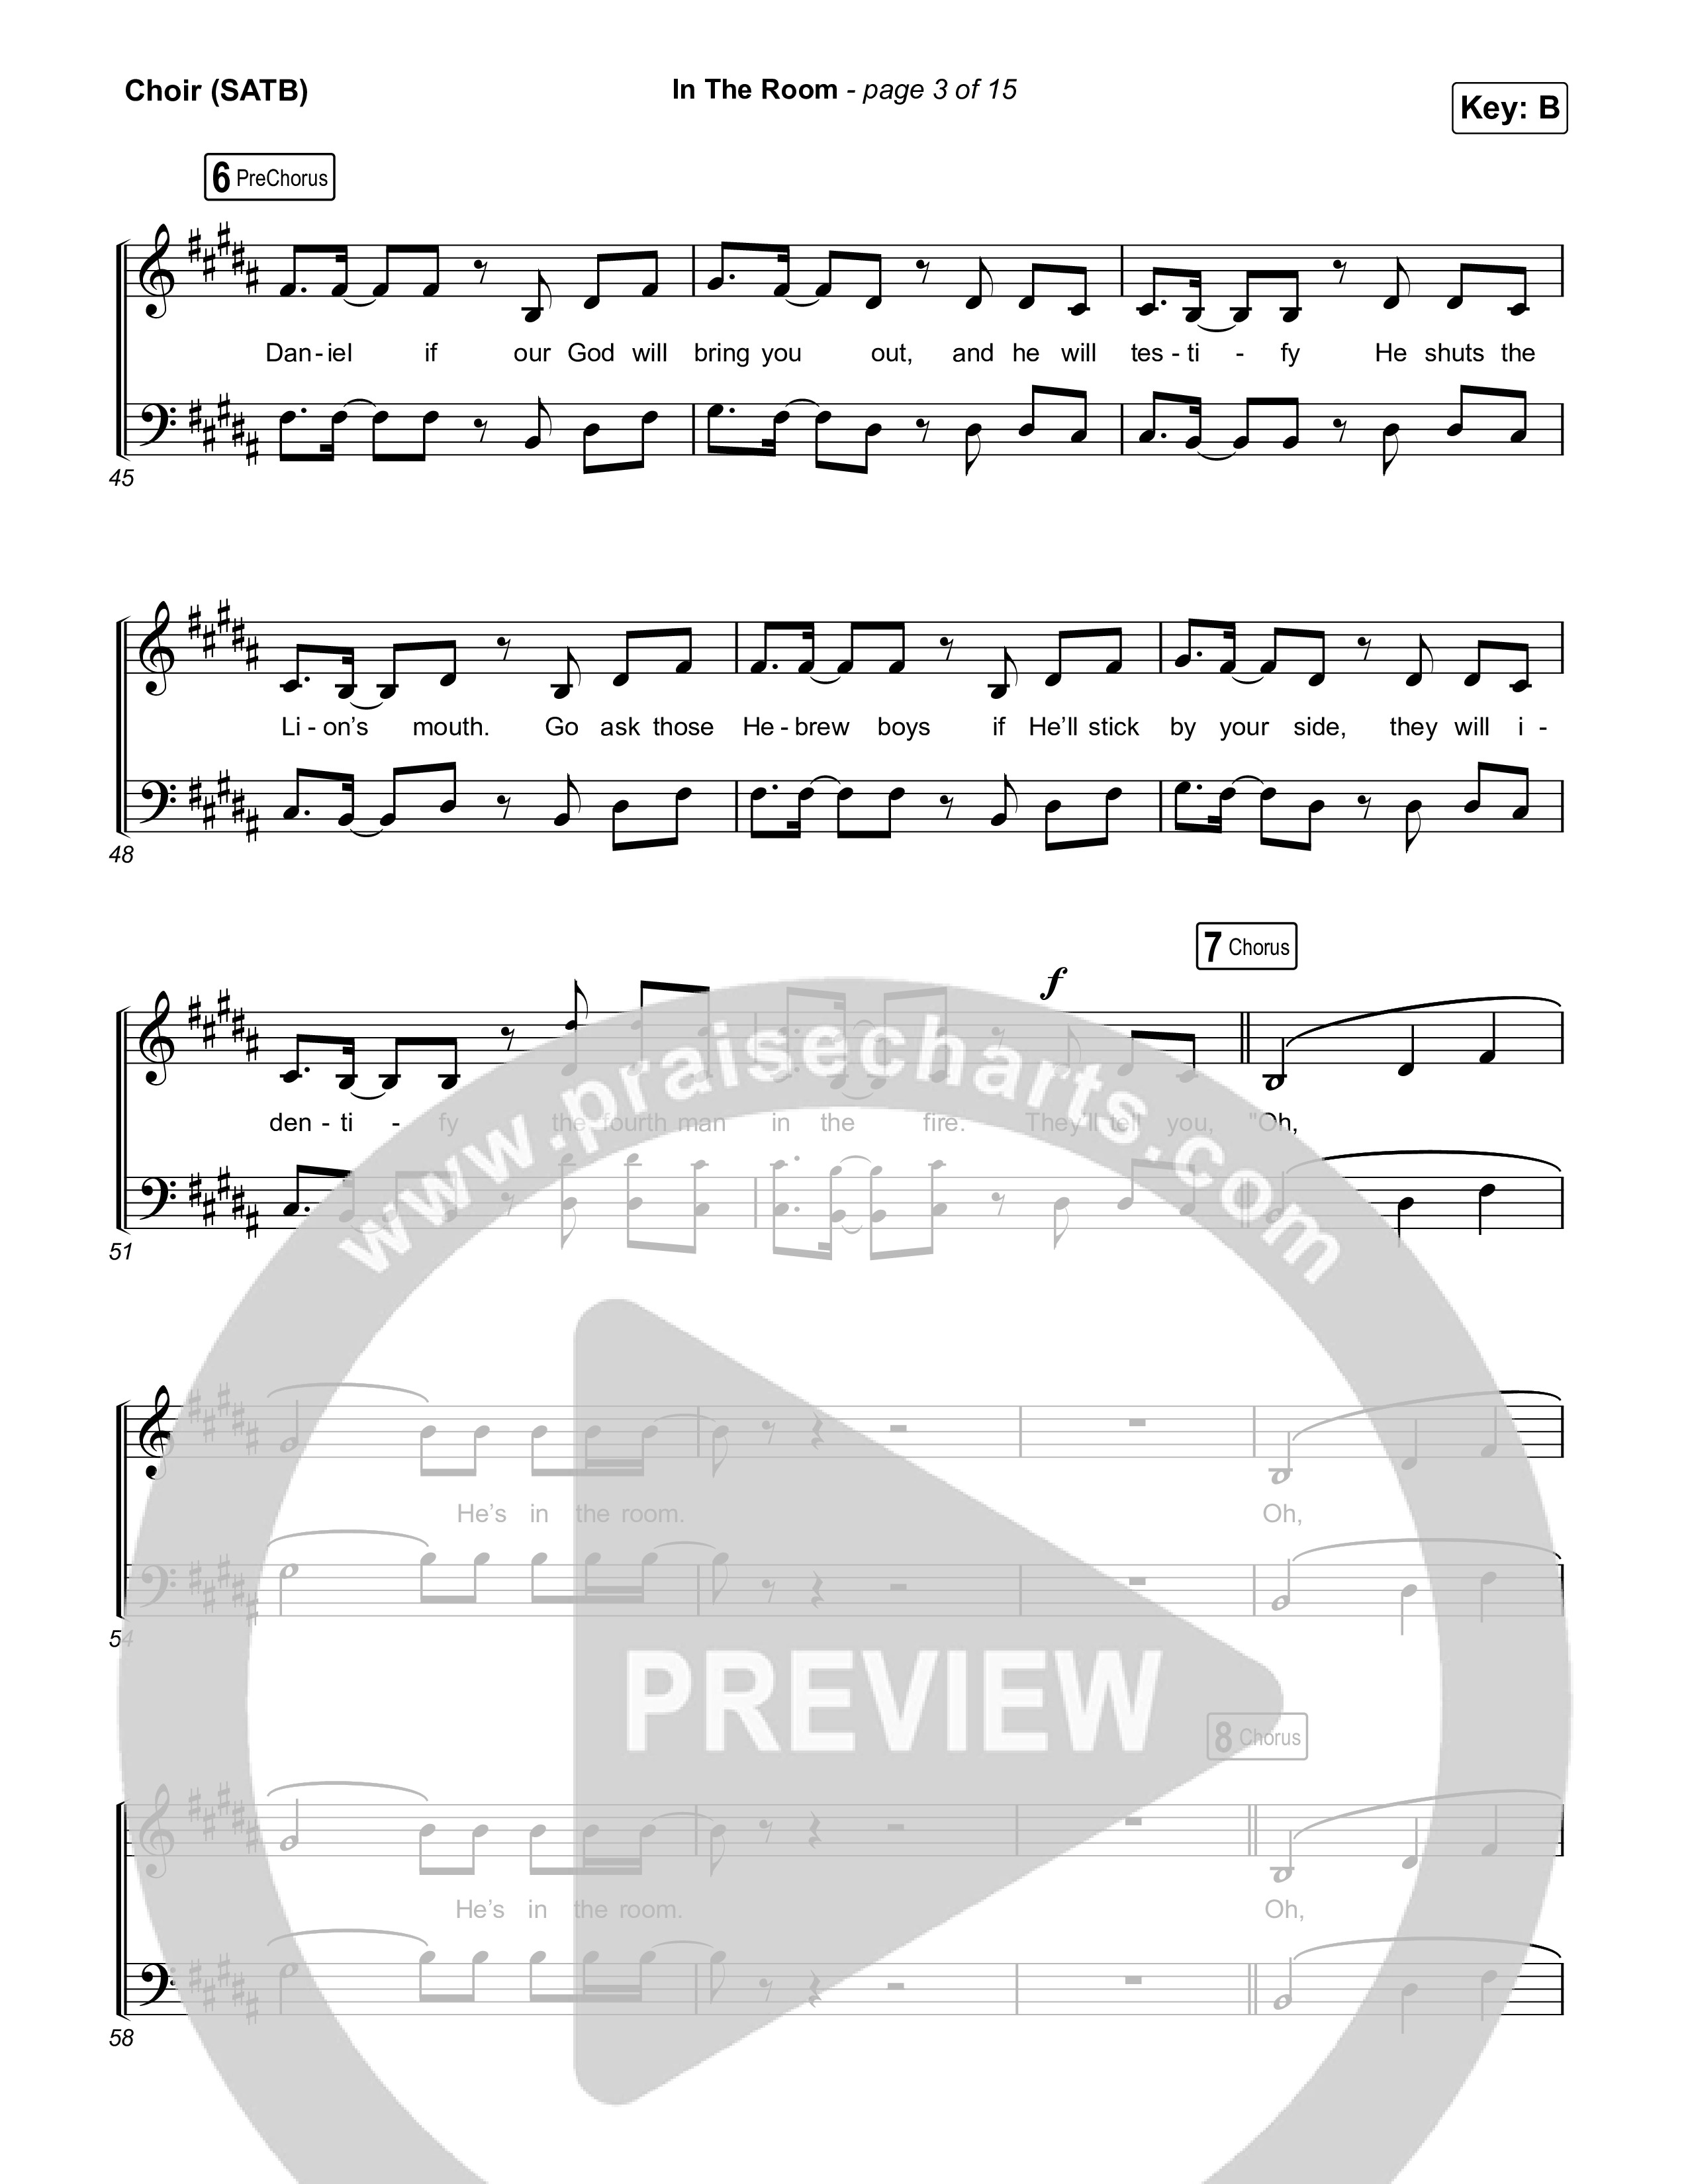 In The Room Choir Sheet (SATB) (Maverick City Music / Tasha Cobbs Leonard)